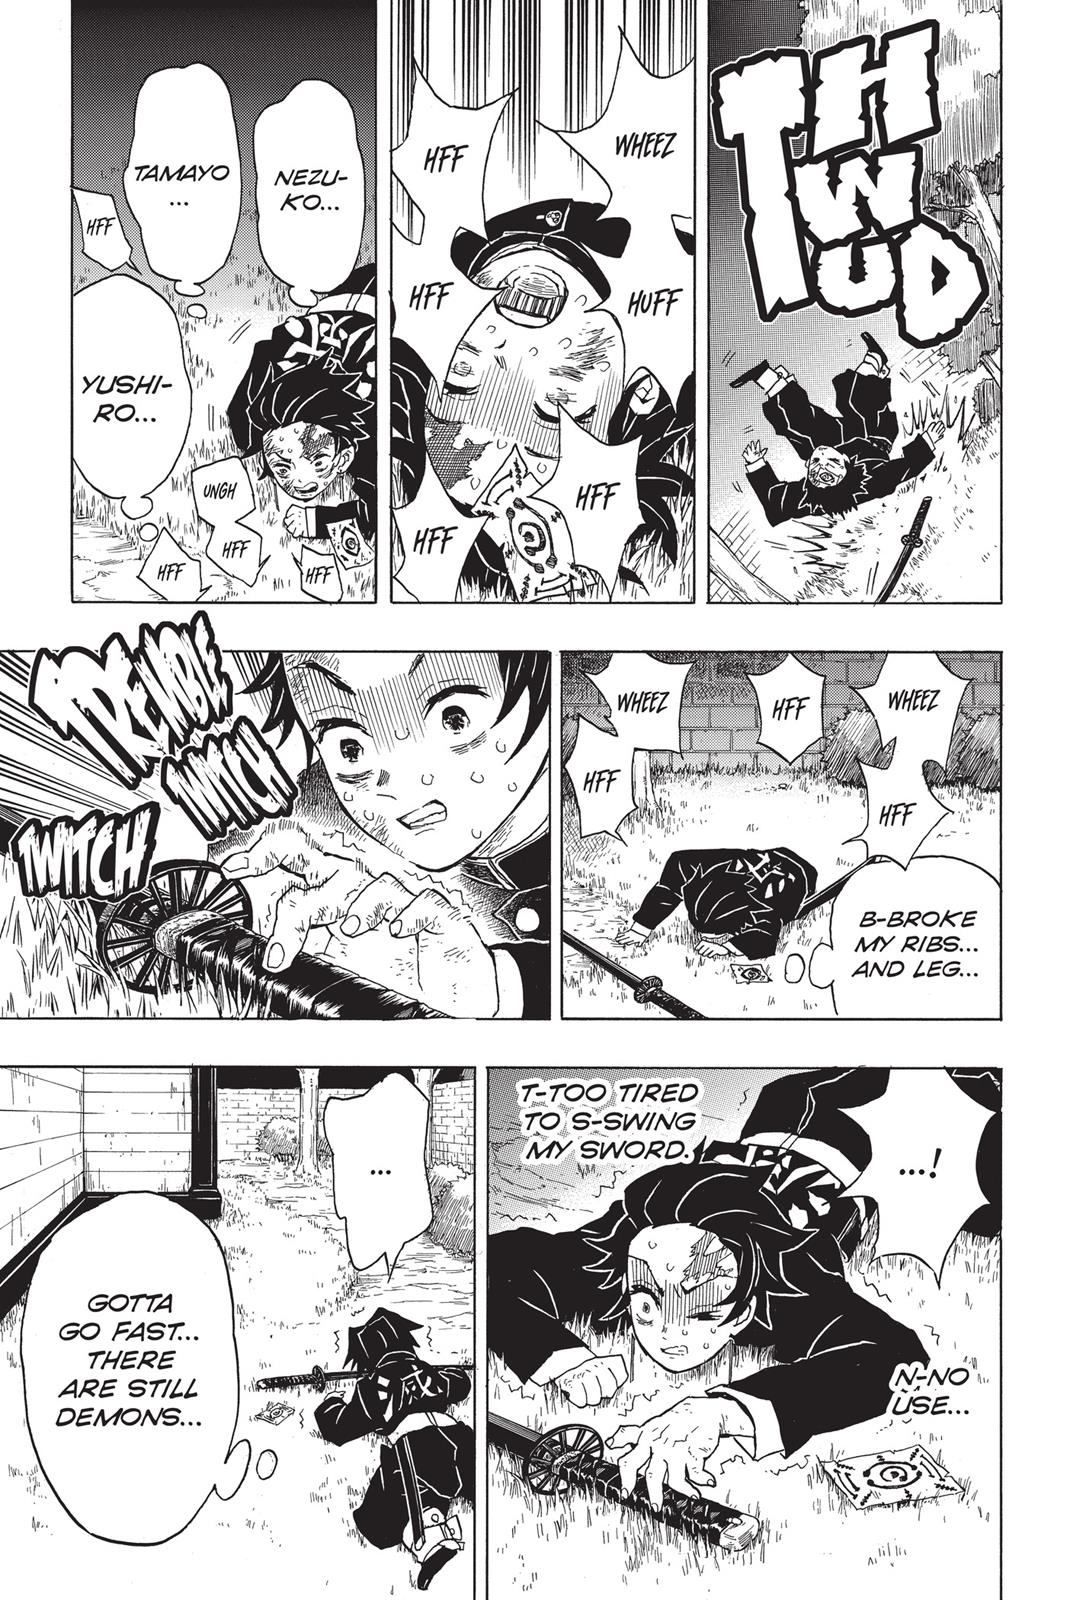 Stream [Read] Online Demon Slayer: Kimetsu no Yaiba, Vol. 18: BY : HaDu  Manga by Devinbrown1961